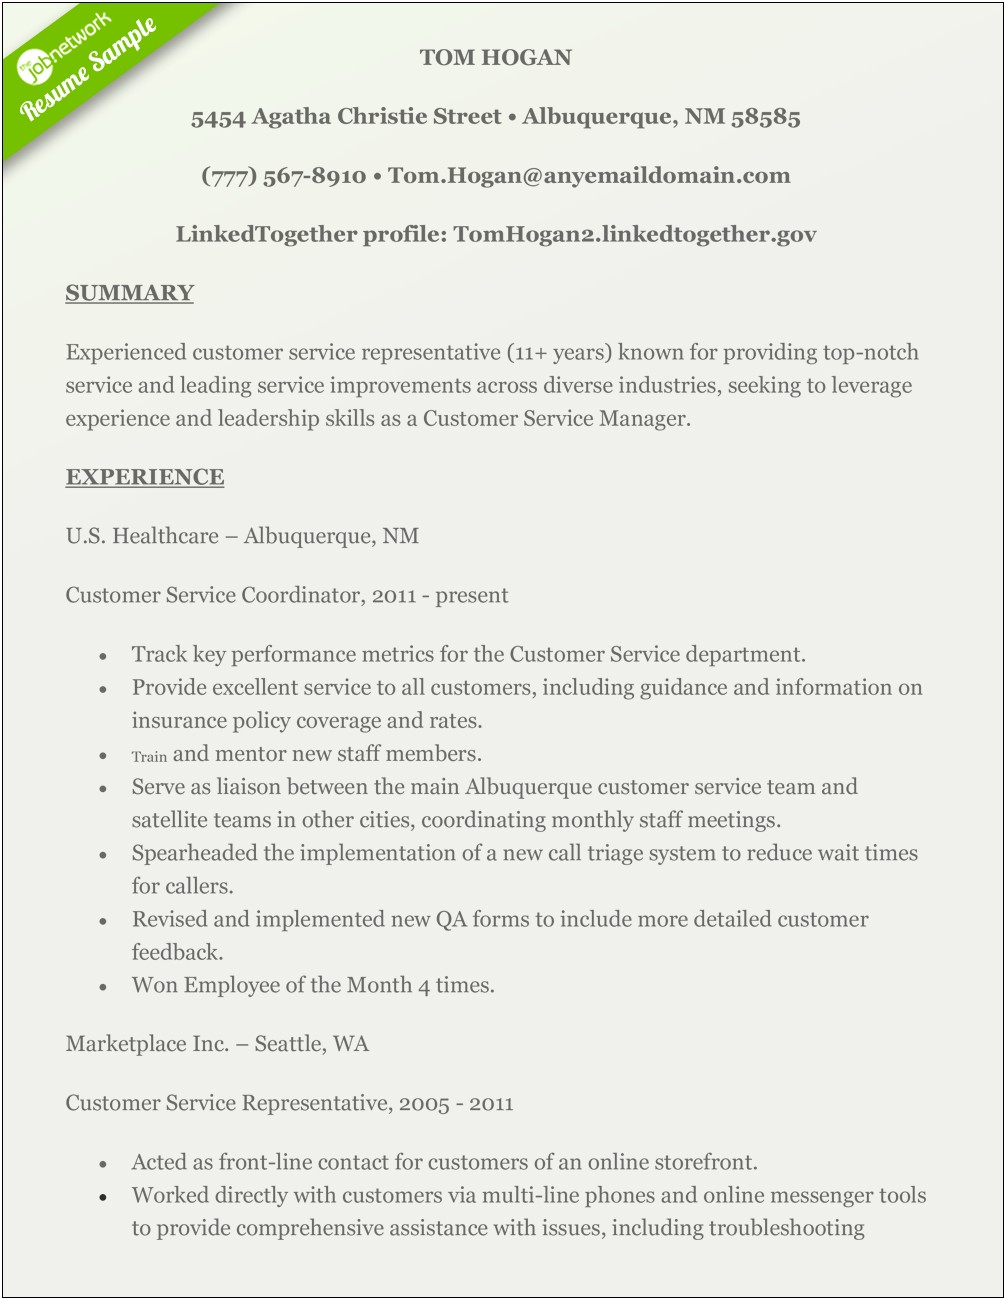 Customer Service Job Summary For Resume